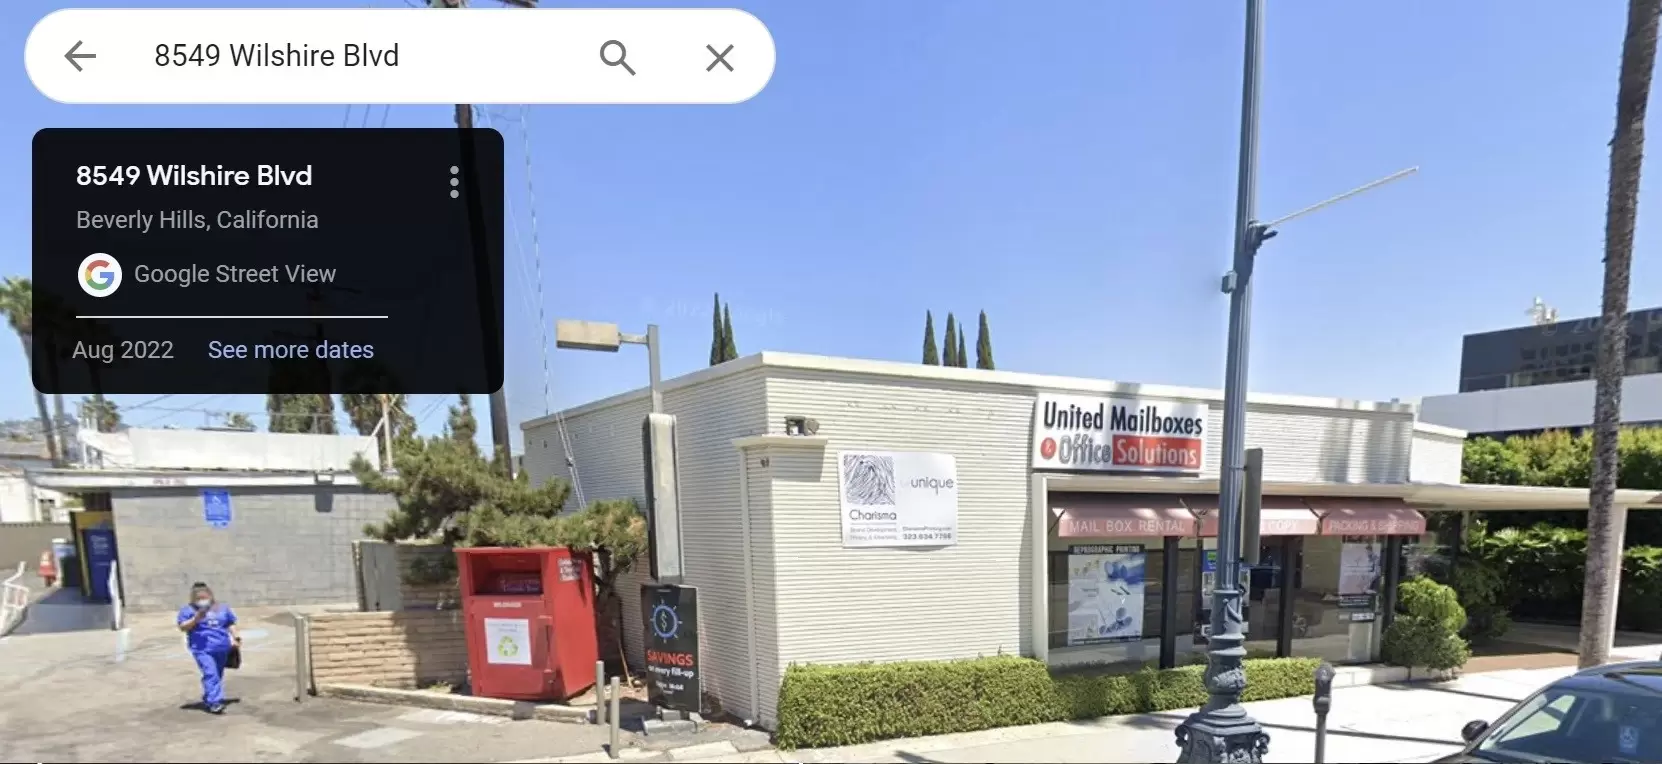 Agency storefront in California